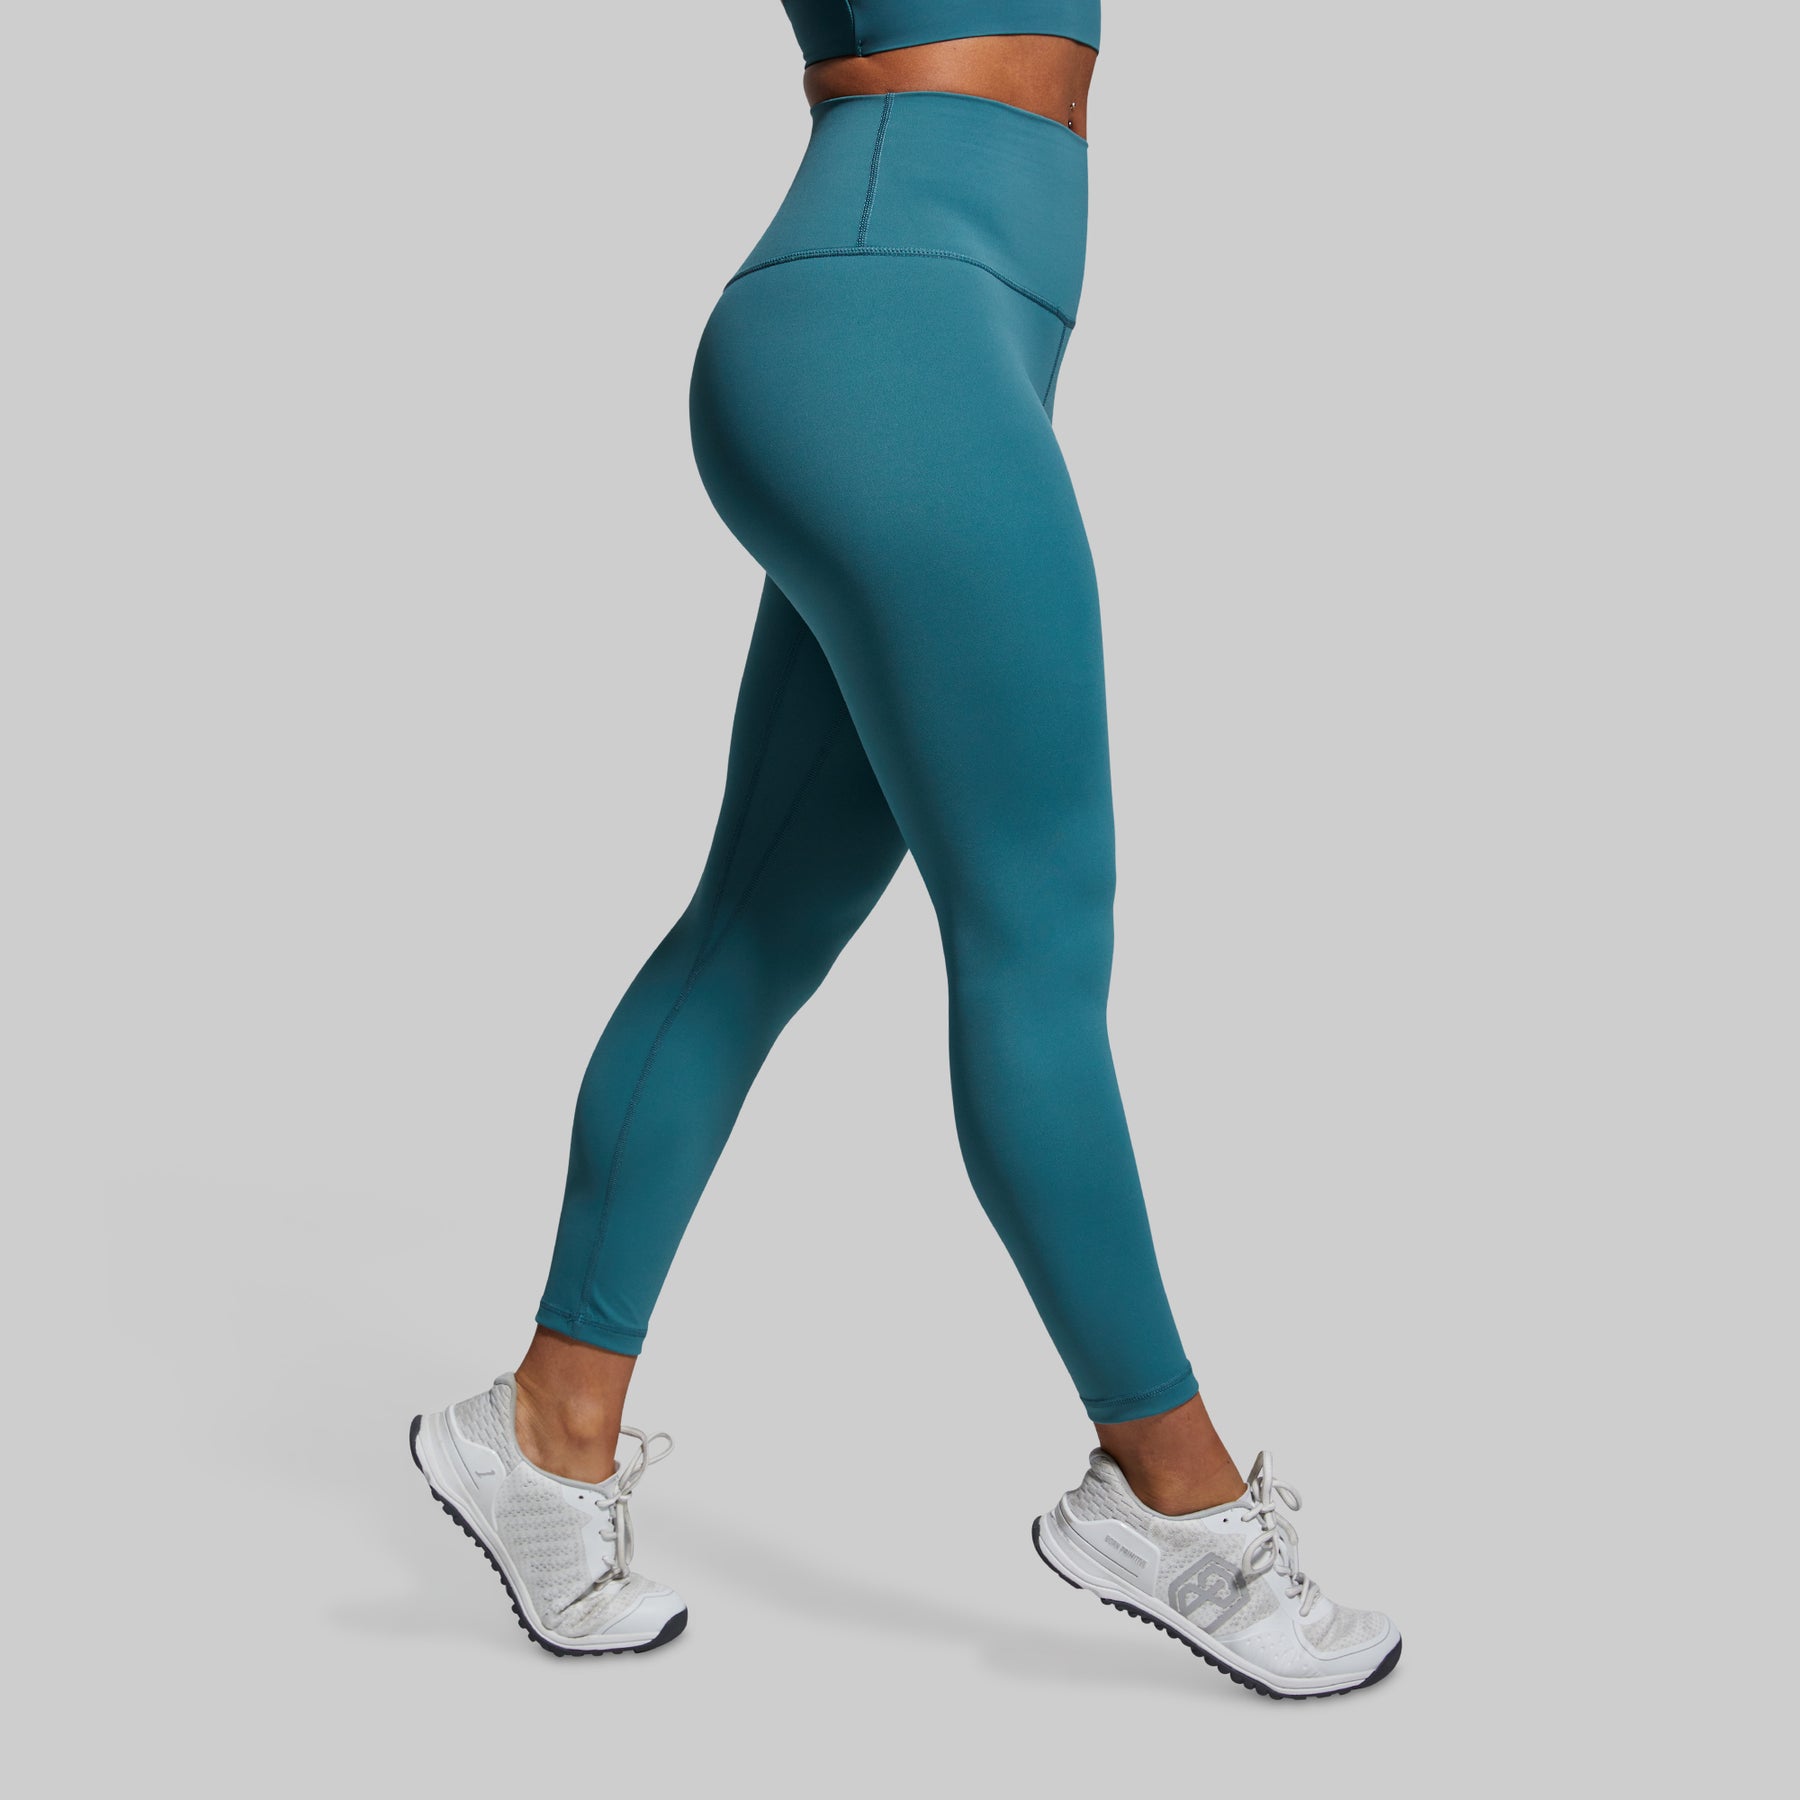 Turquoise Workout Leggings for Women | Born Primitive